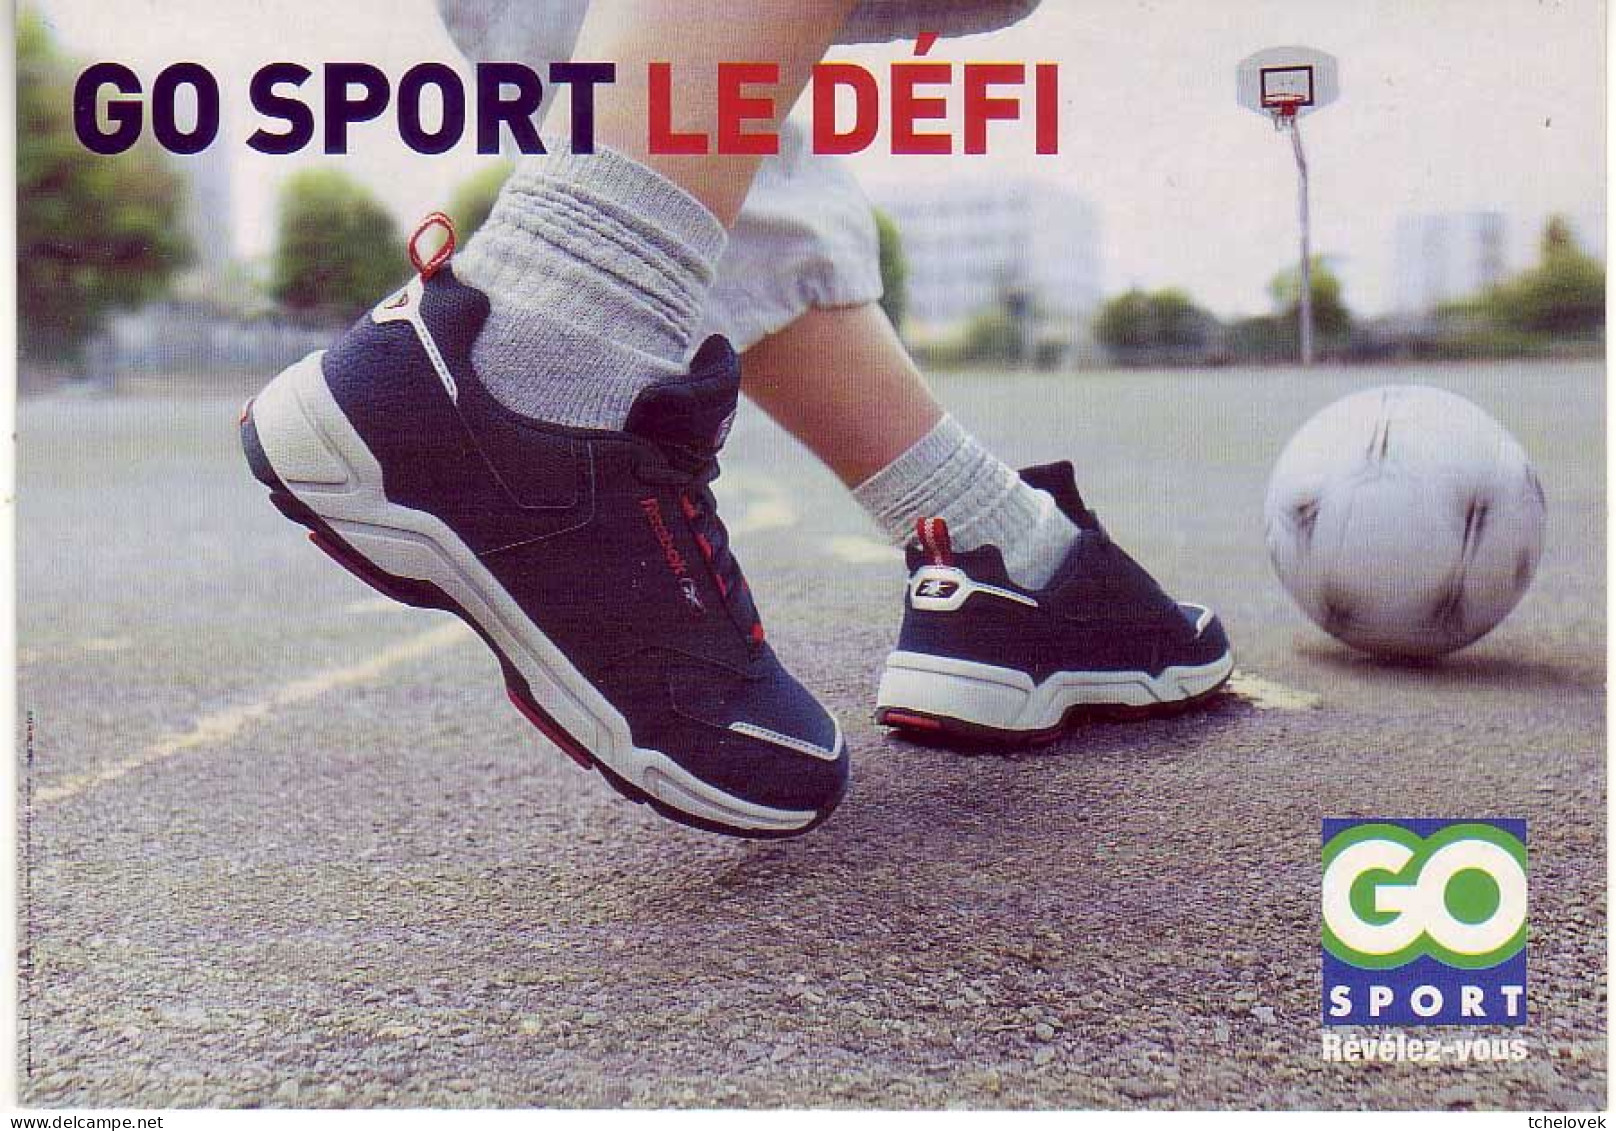 Thèmes. Sports. Basket Ball & Volley Ball. Rouen 2013 & Go Sport Le Defi - Pallavolo